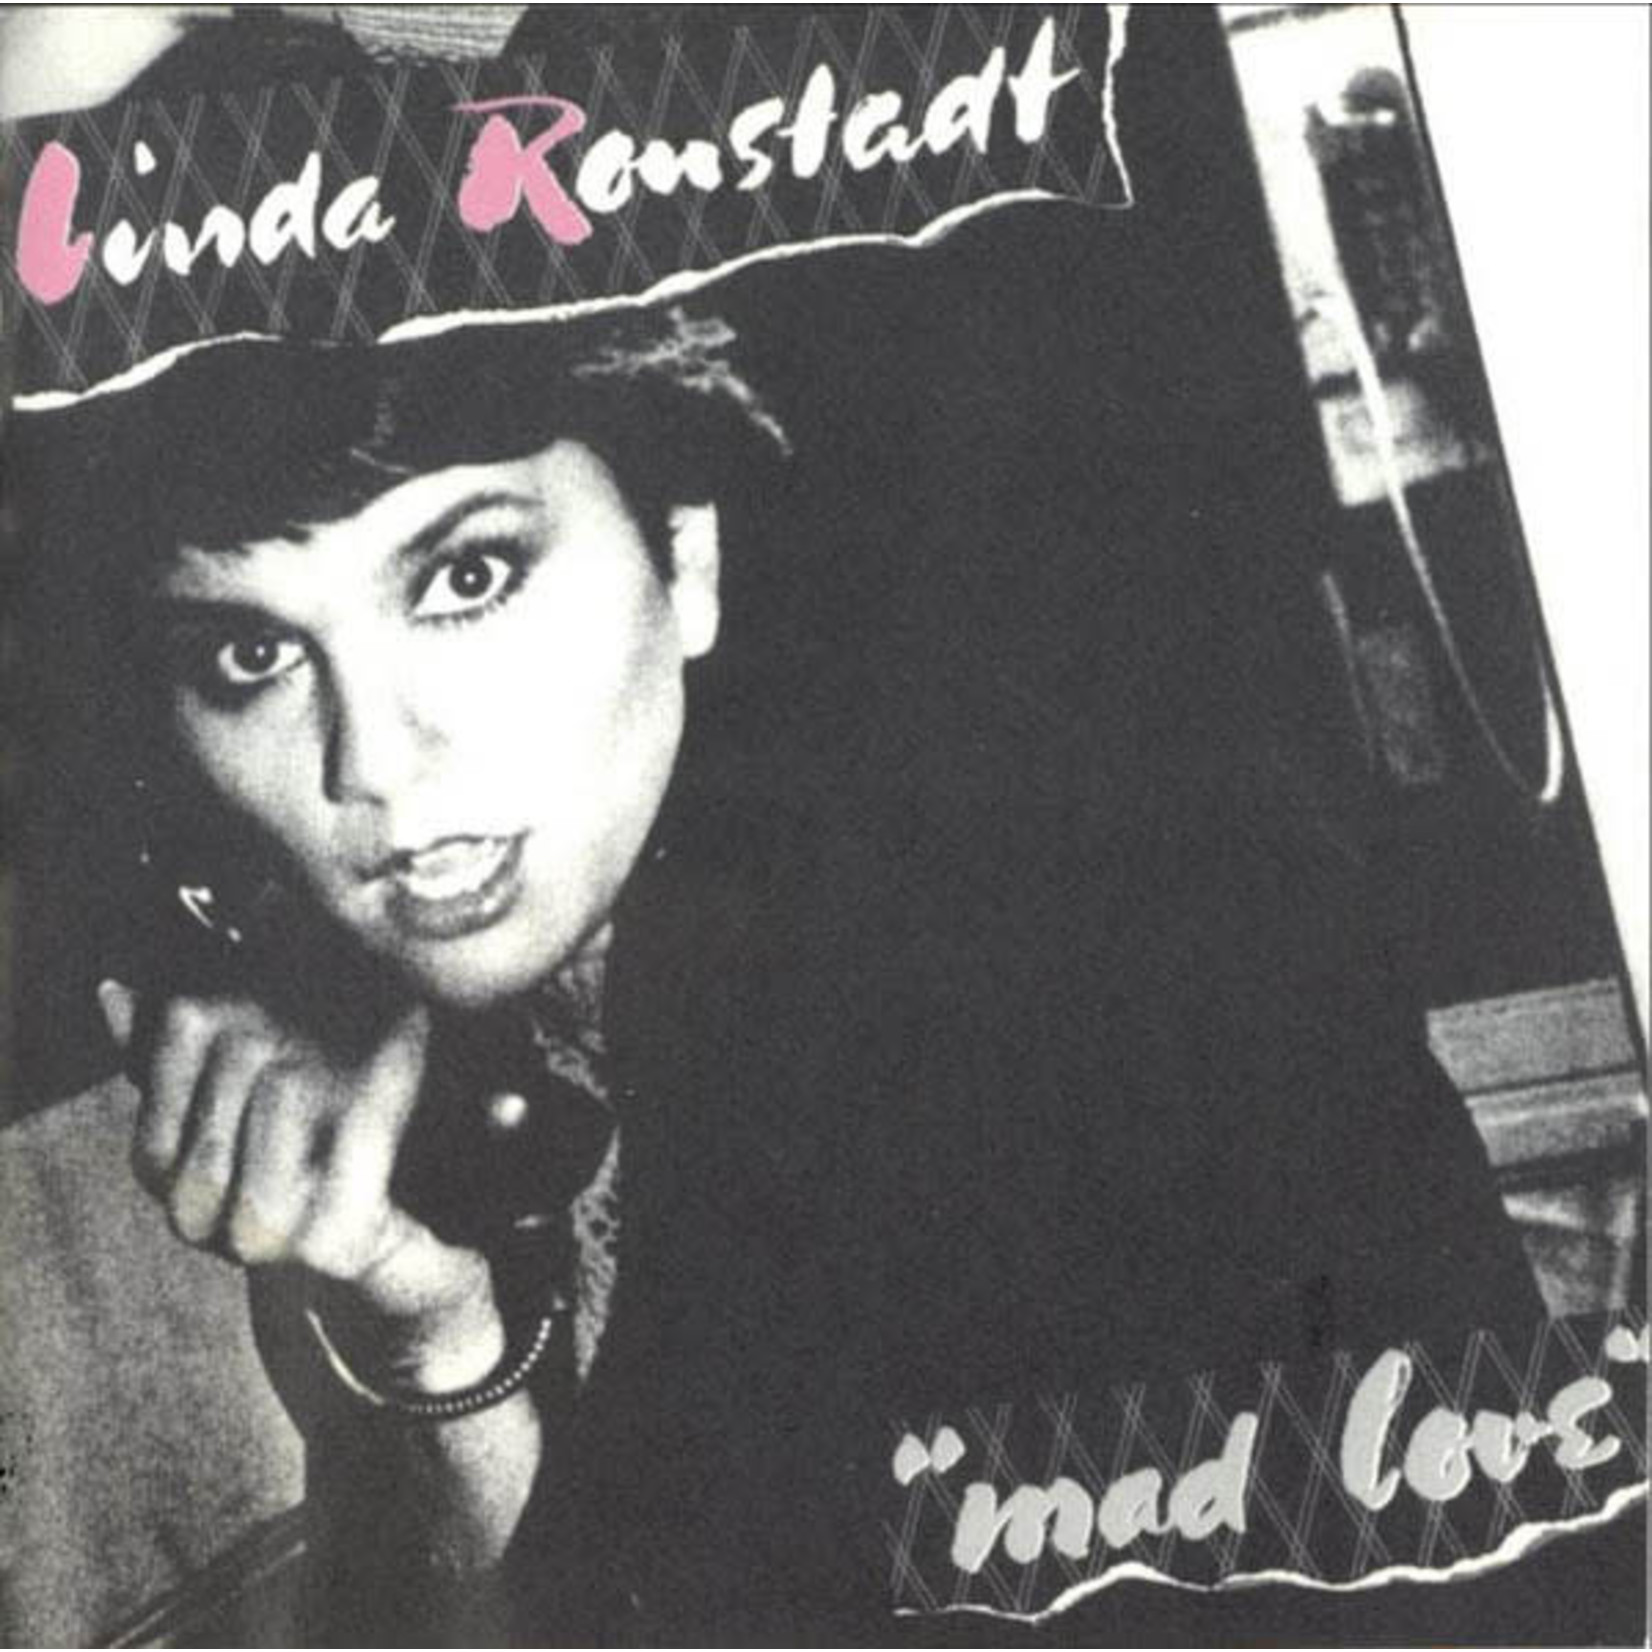 [Vintage] Linda Ronstadt - Mad Love